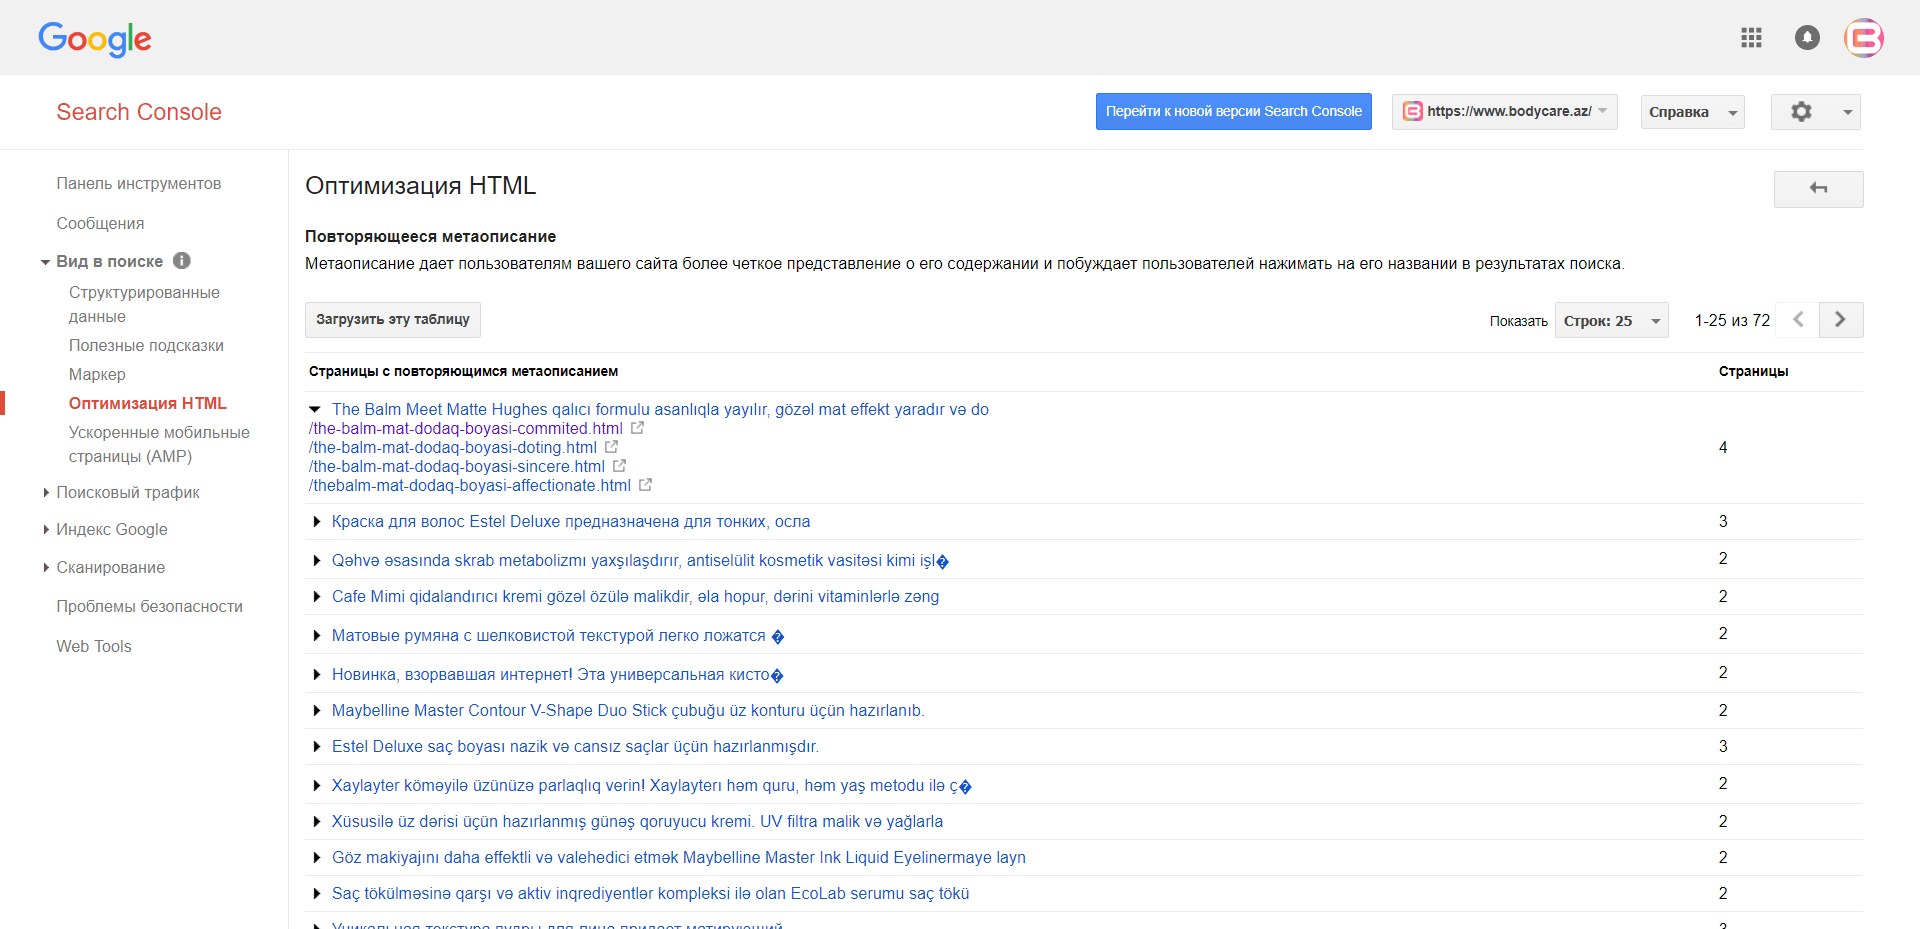 Google Search Console - Повторяющиеся Meta Title